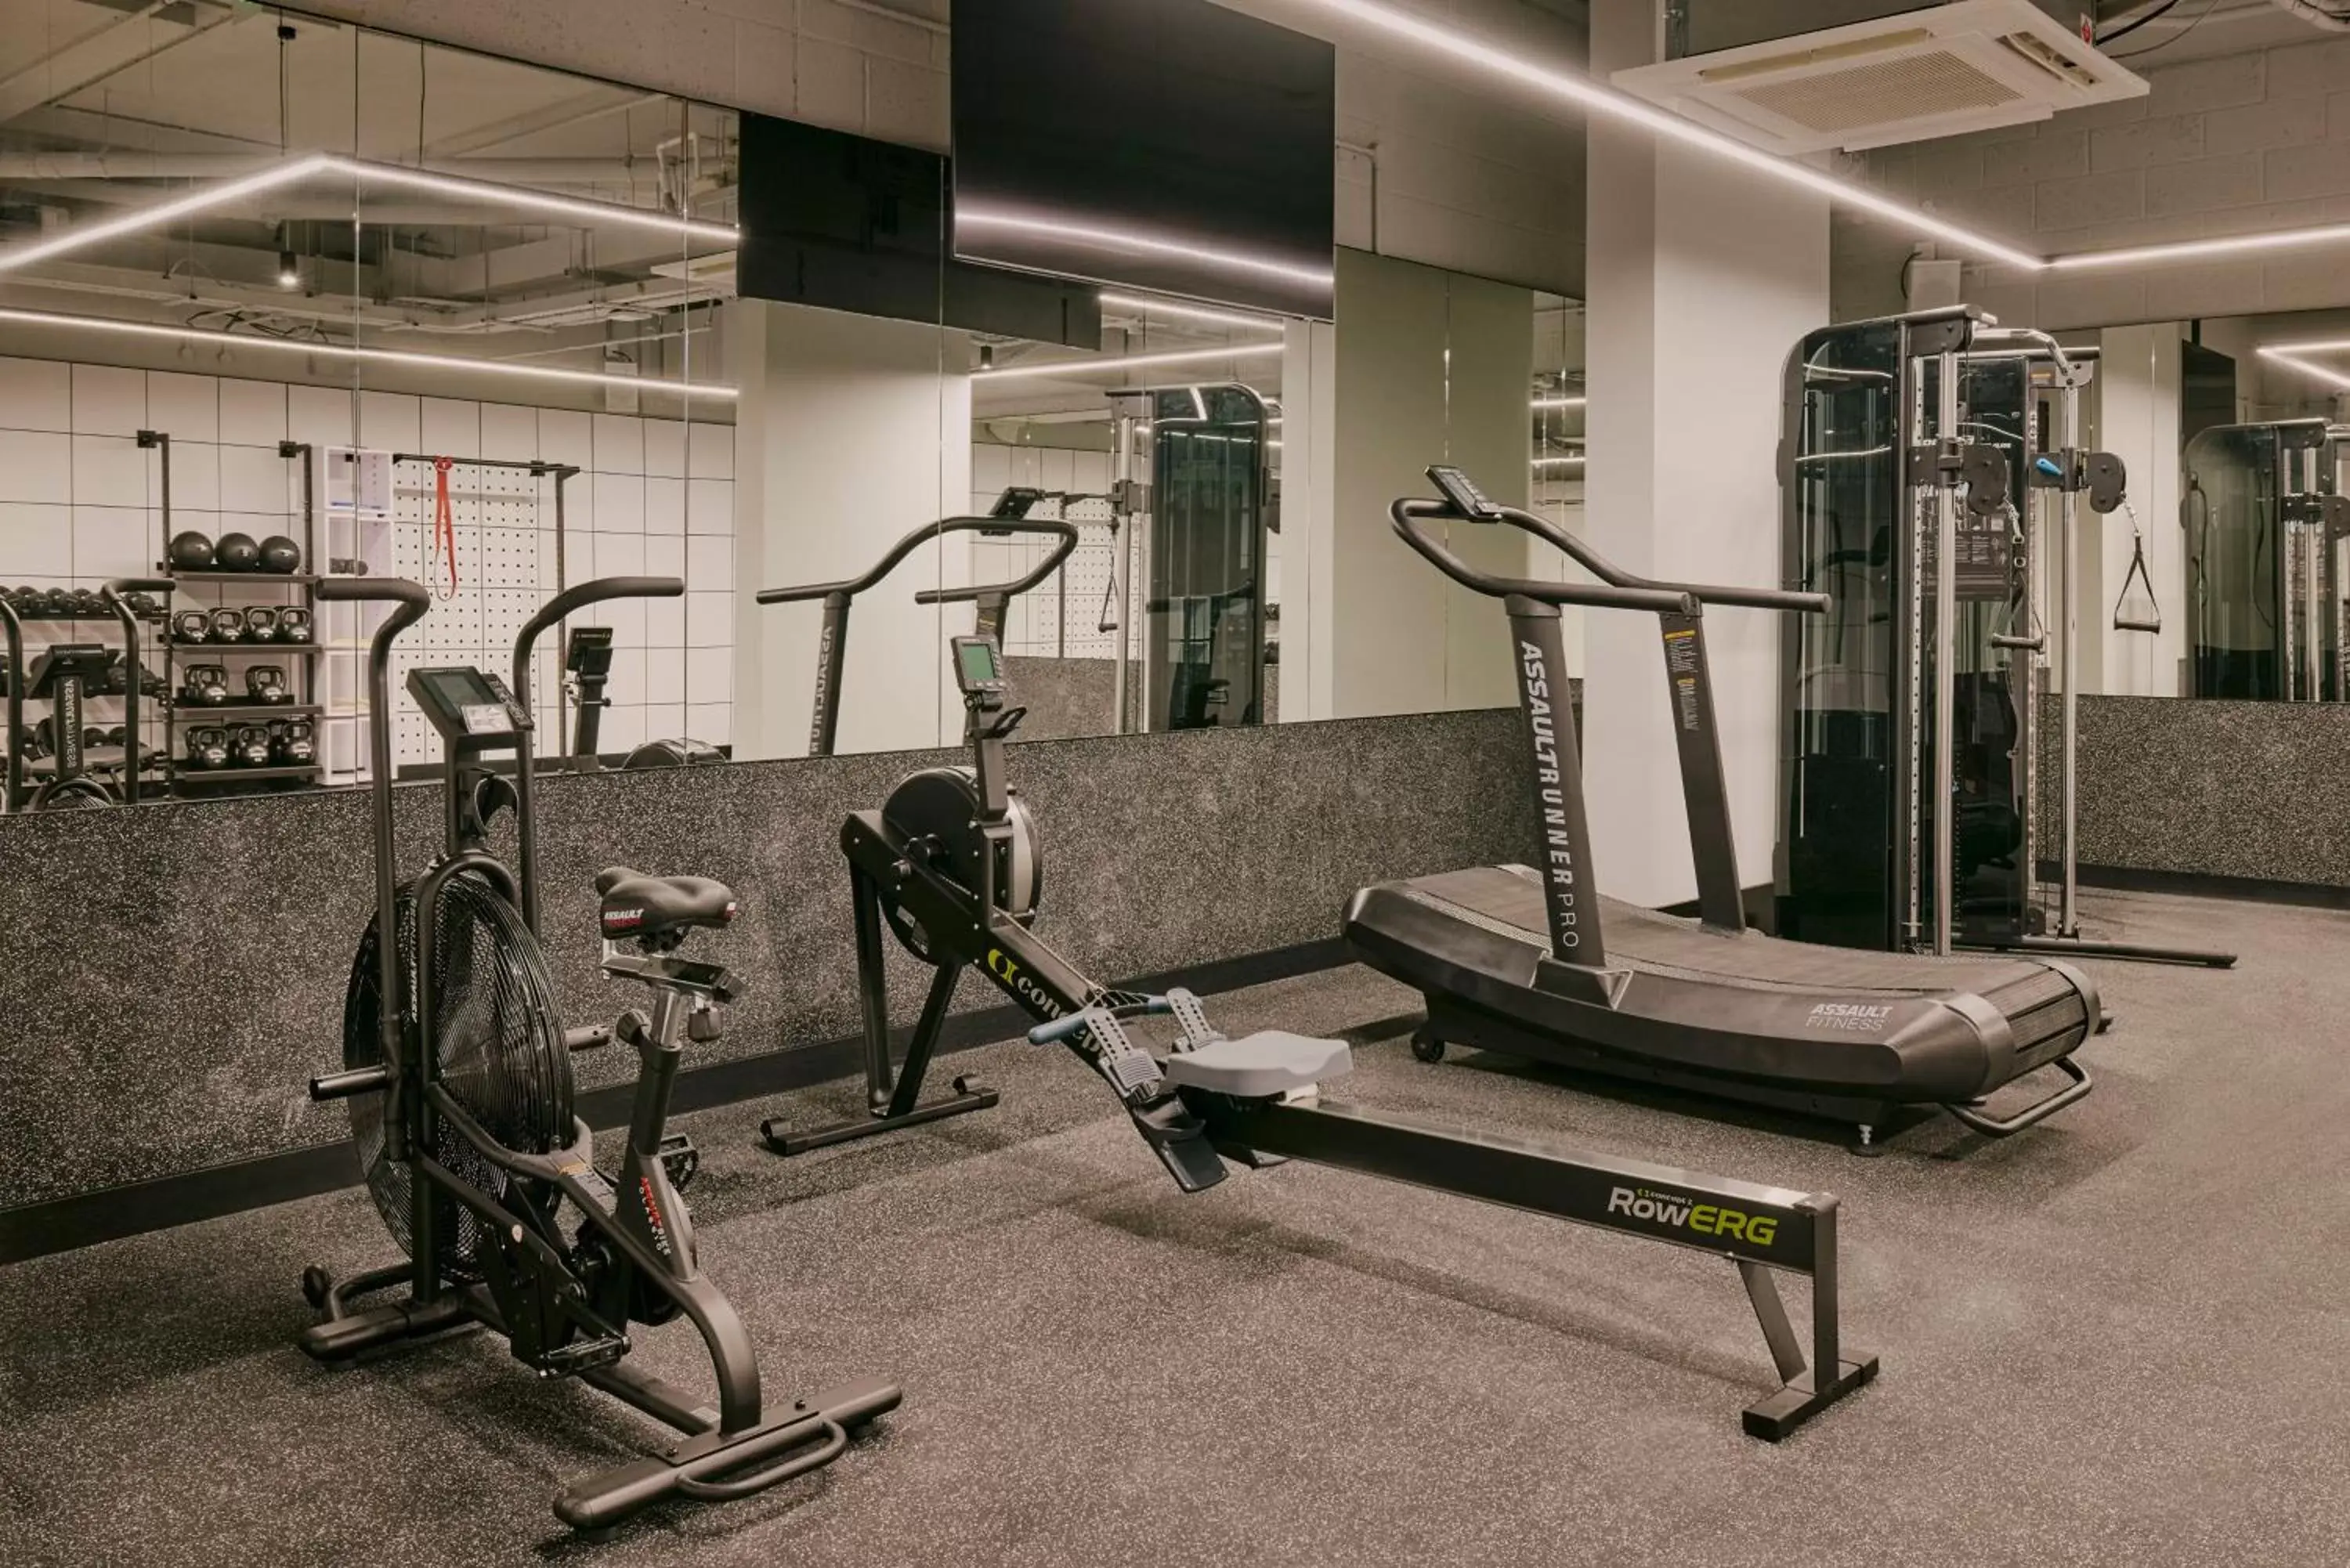 Fitness centre/facilities, Fitness Center/Facilities in Ember Locke